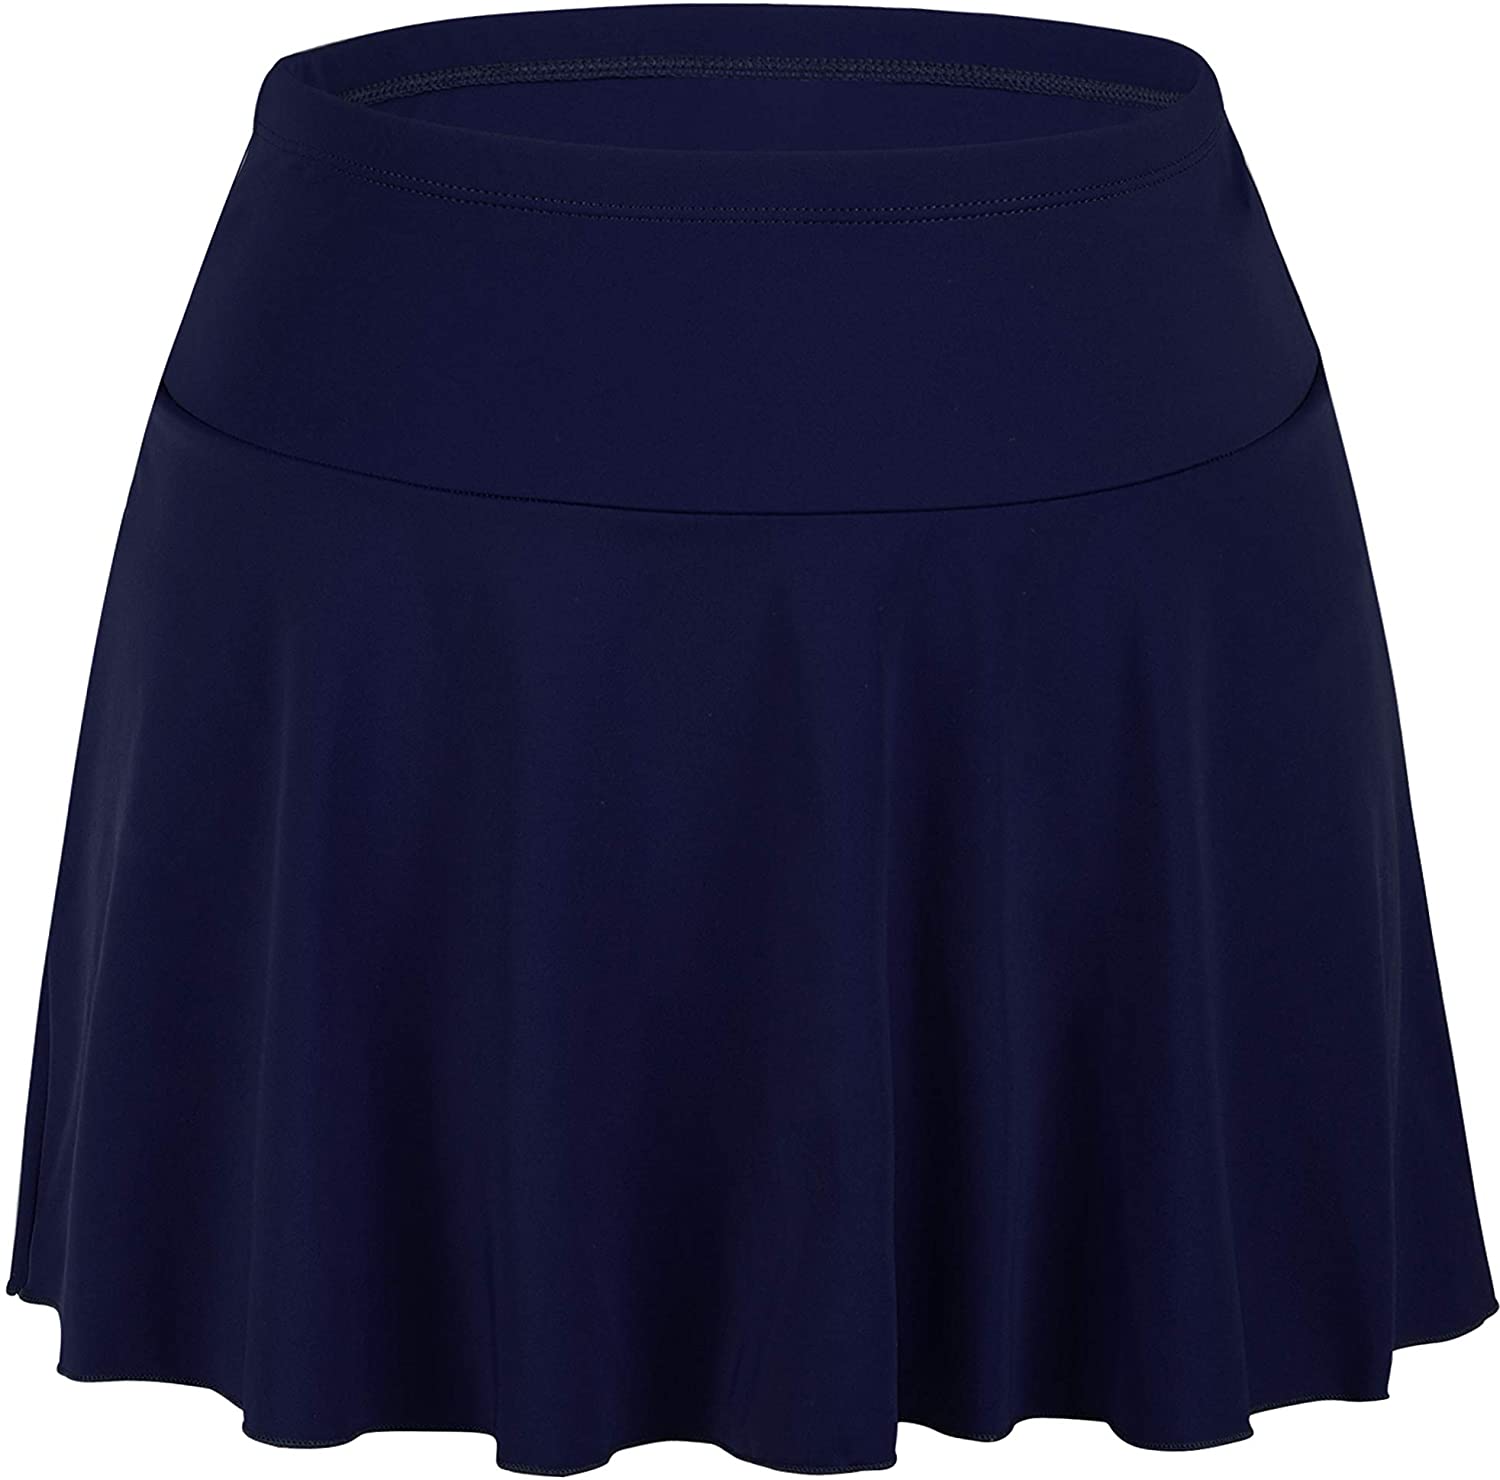 Septangle Women's High Waist Swim Skirt Tummy Control, Navy Blue, Size ...